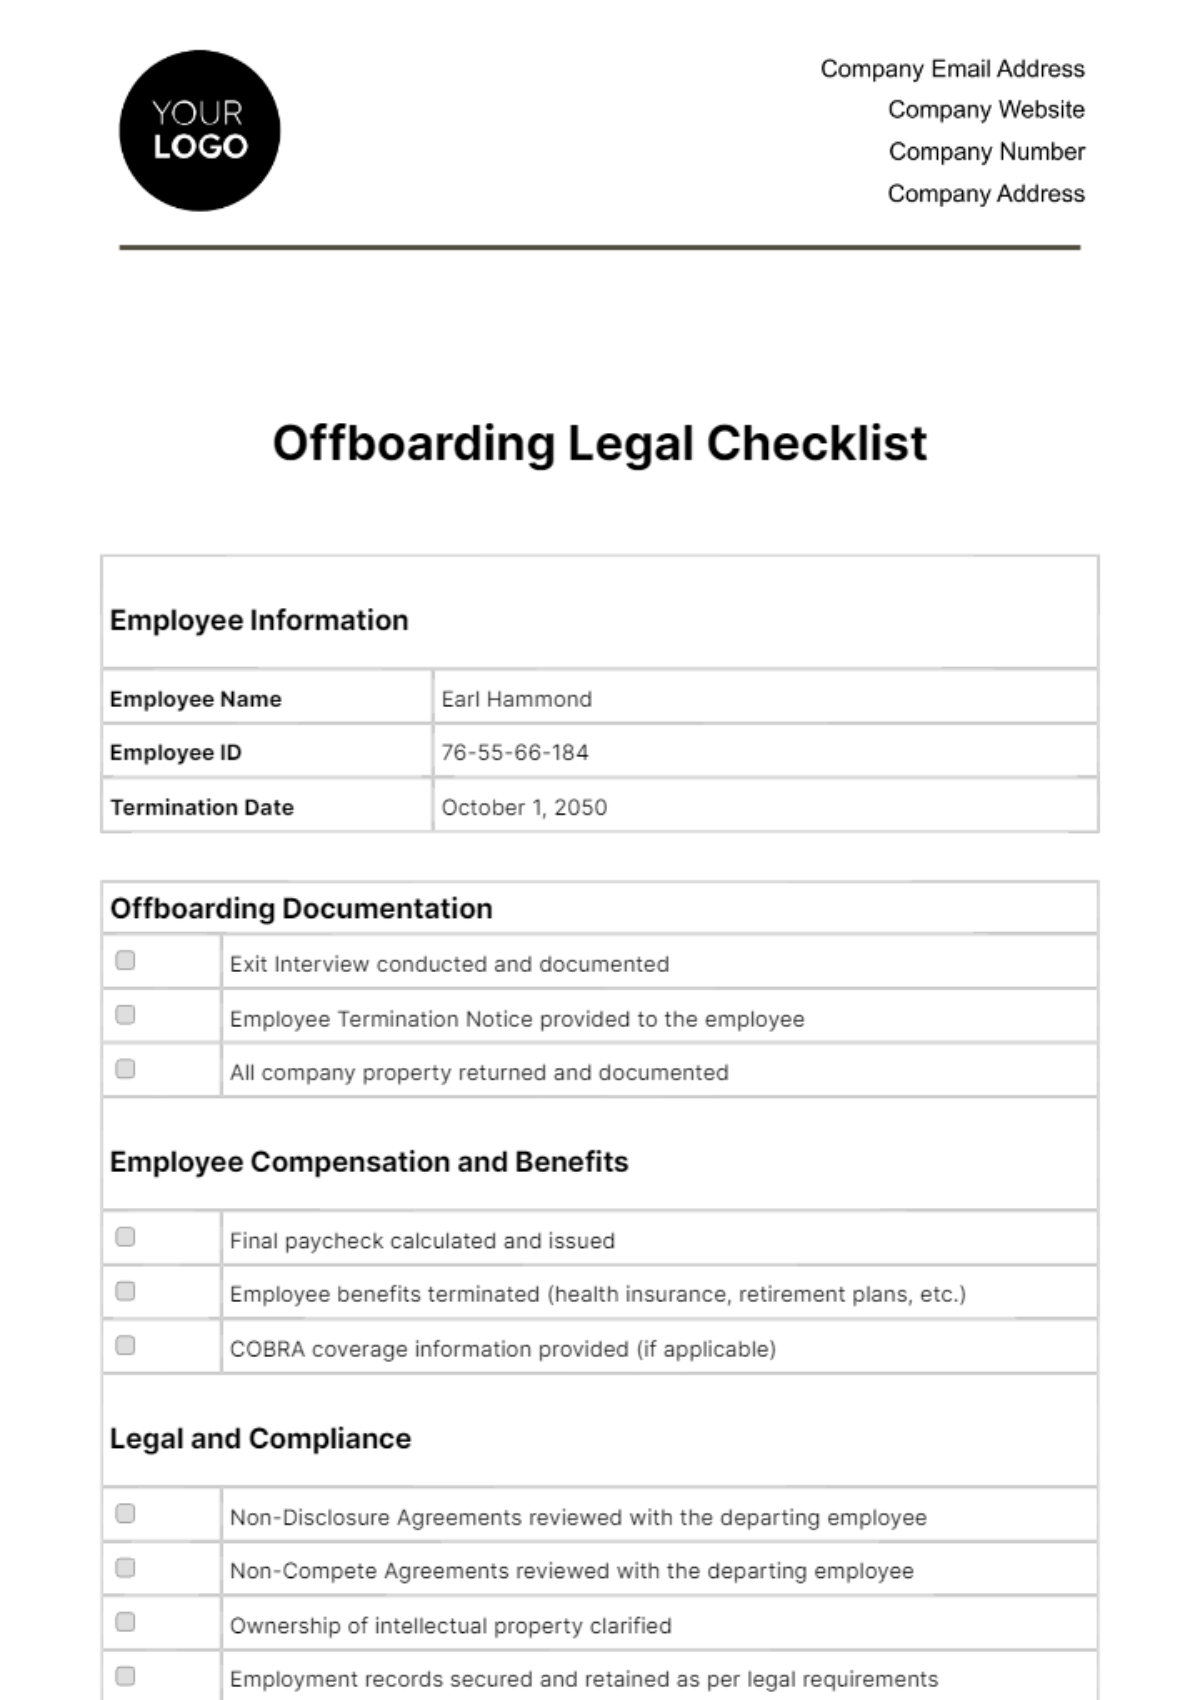 Offboarding Legal Checklist HR Template